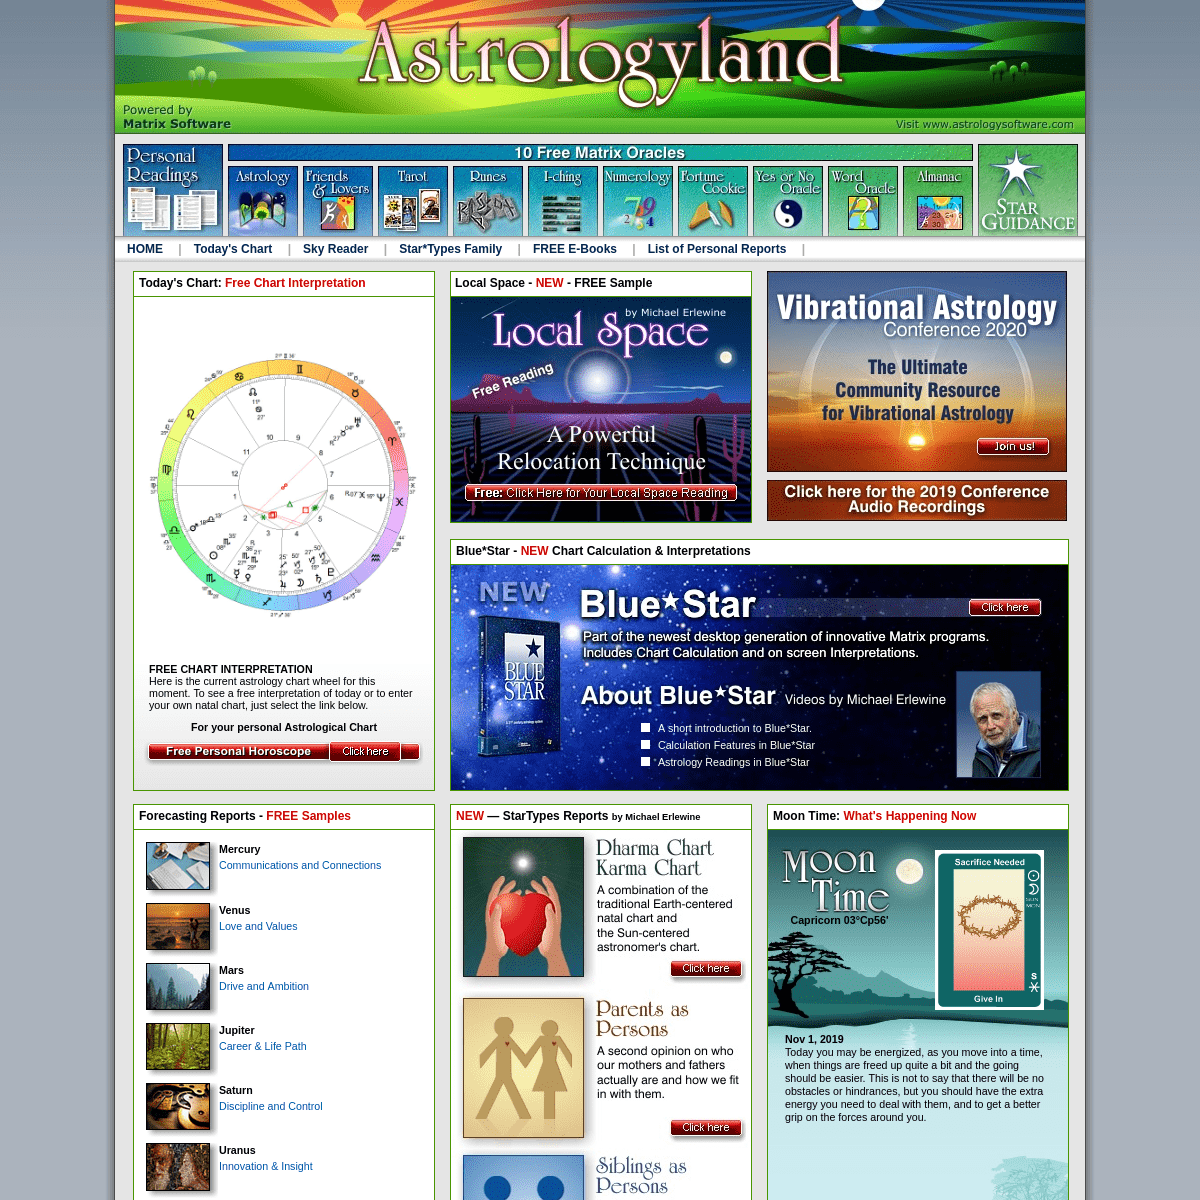 A complete backup of astrologyland.com